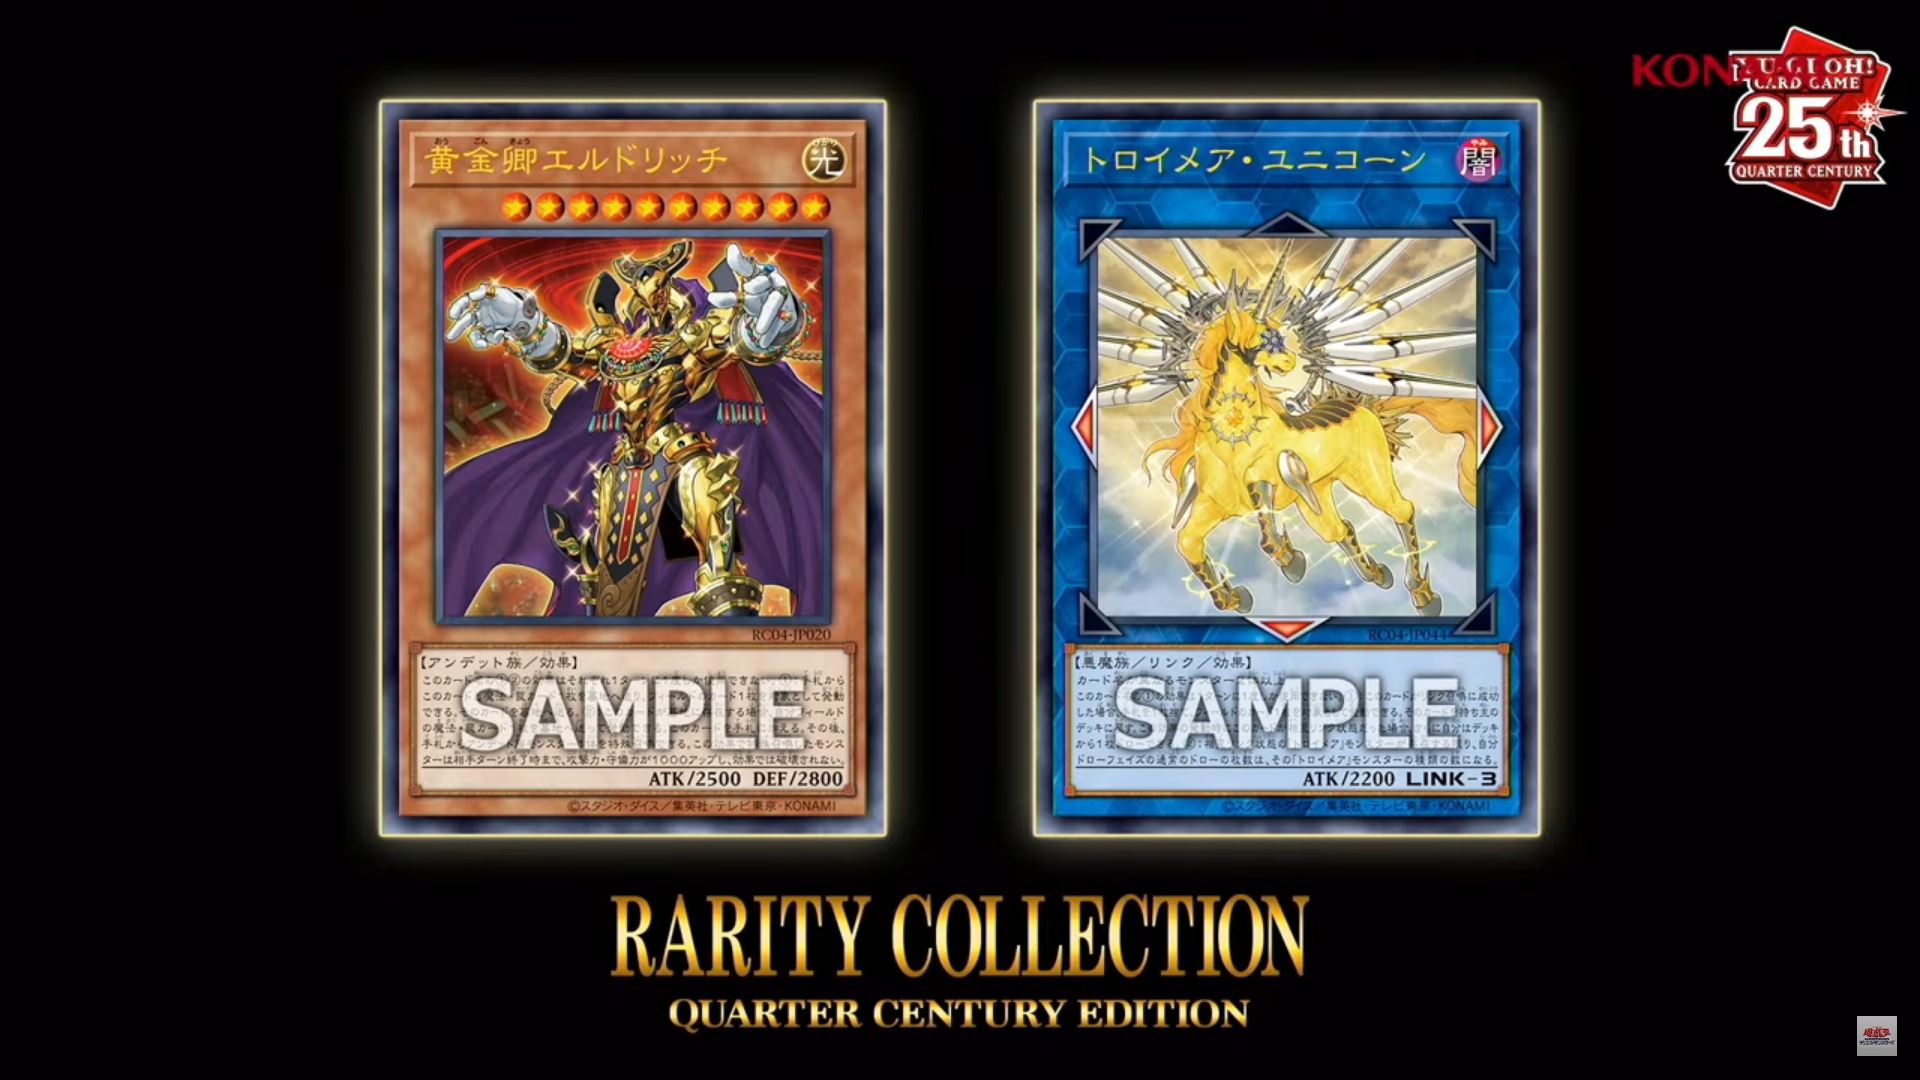 YGOrganization | [RC04] Rarity Collection Quarter Century Edition News